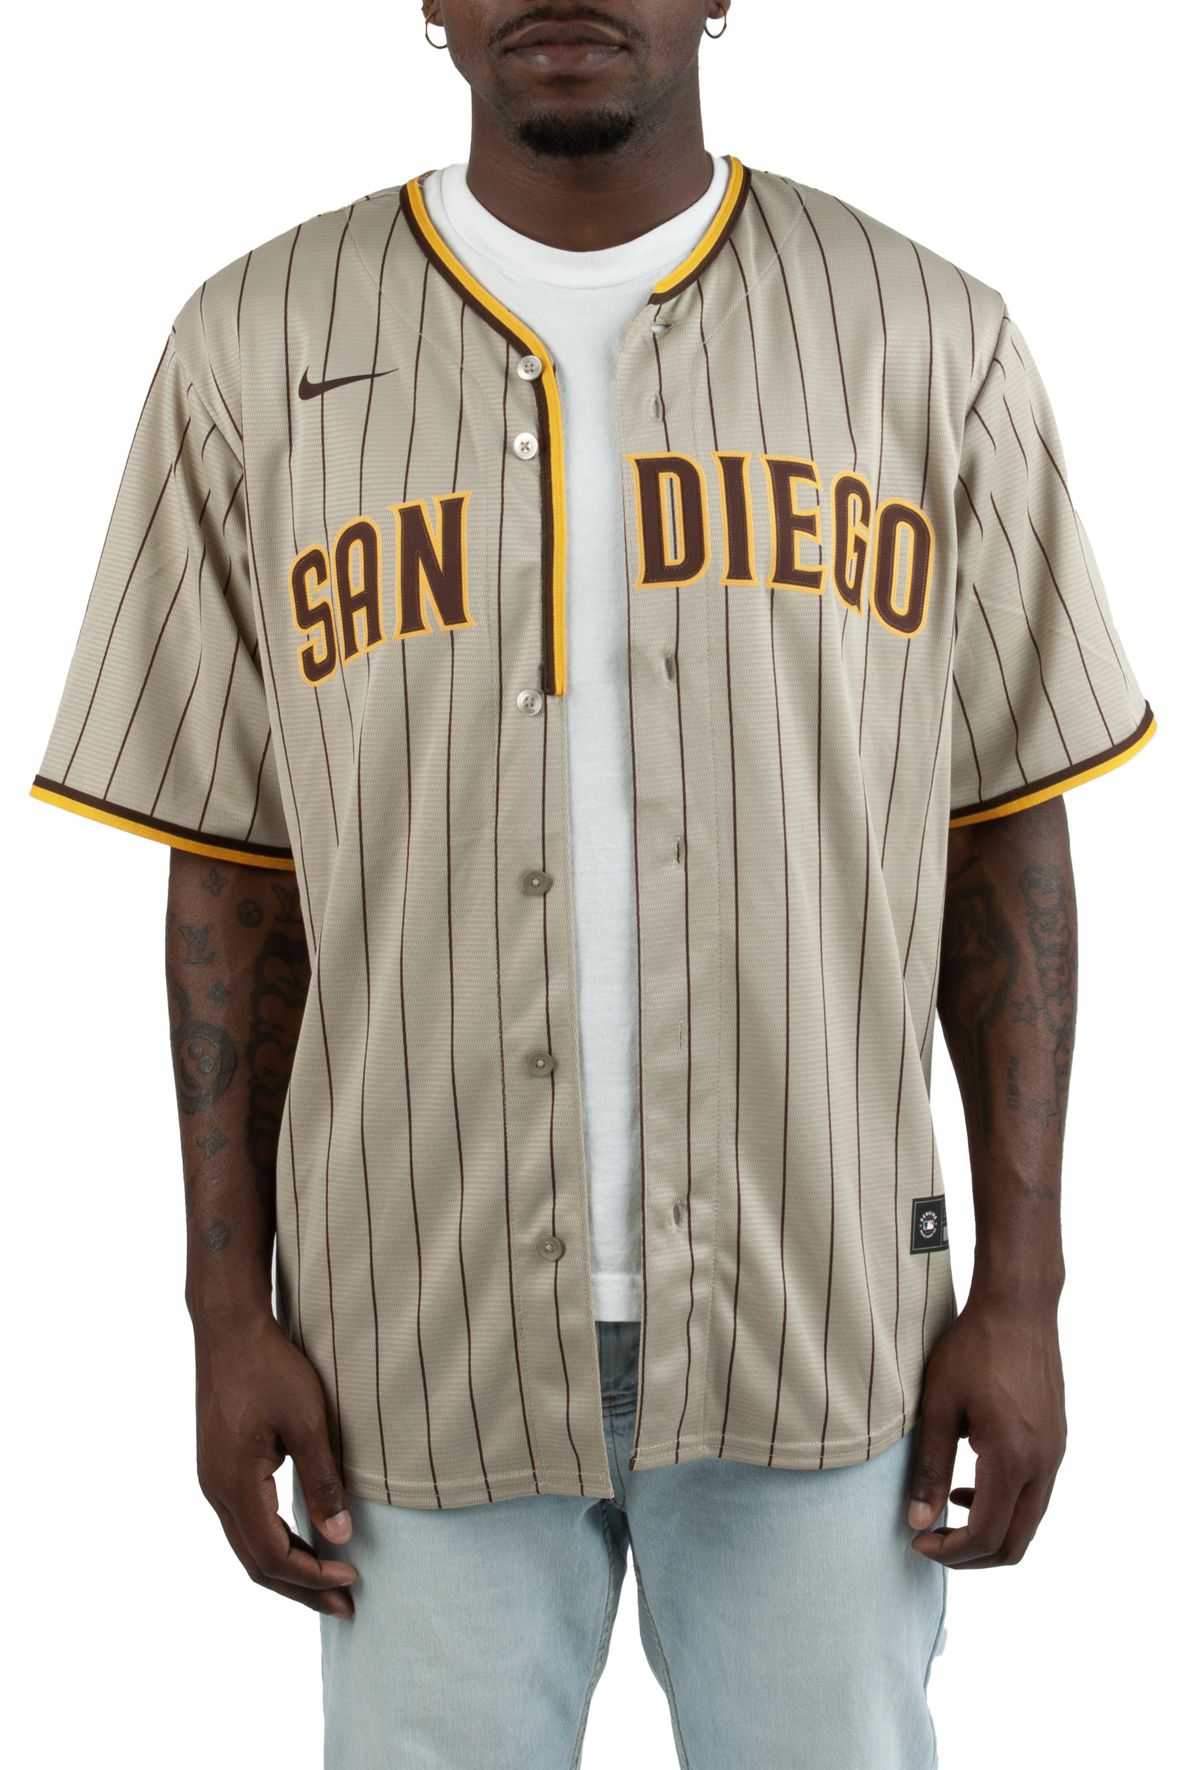 Men's Nike Tan San Diego Padres Alternate Replica Team Jersey